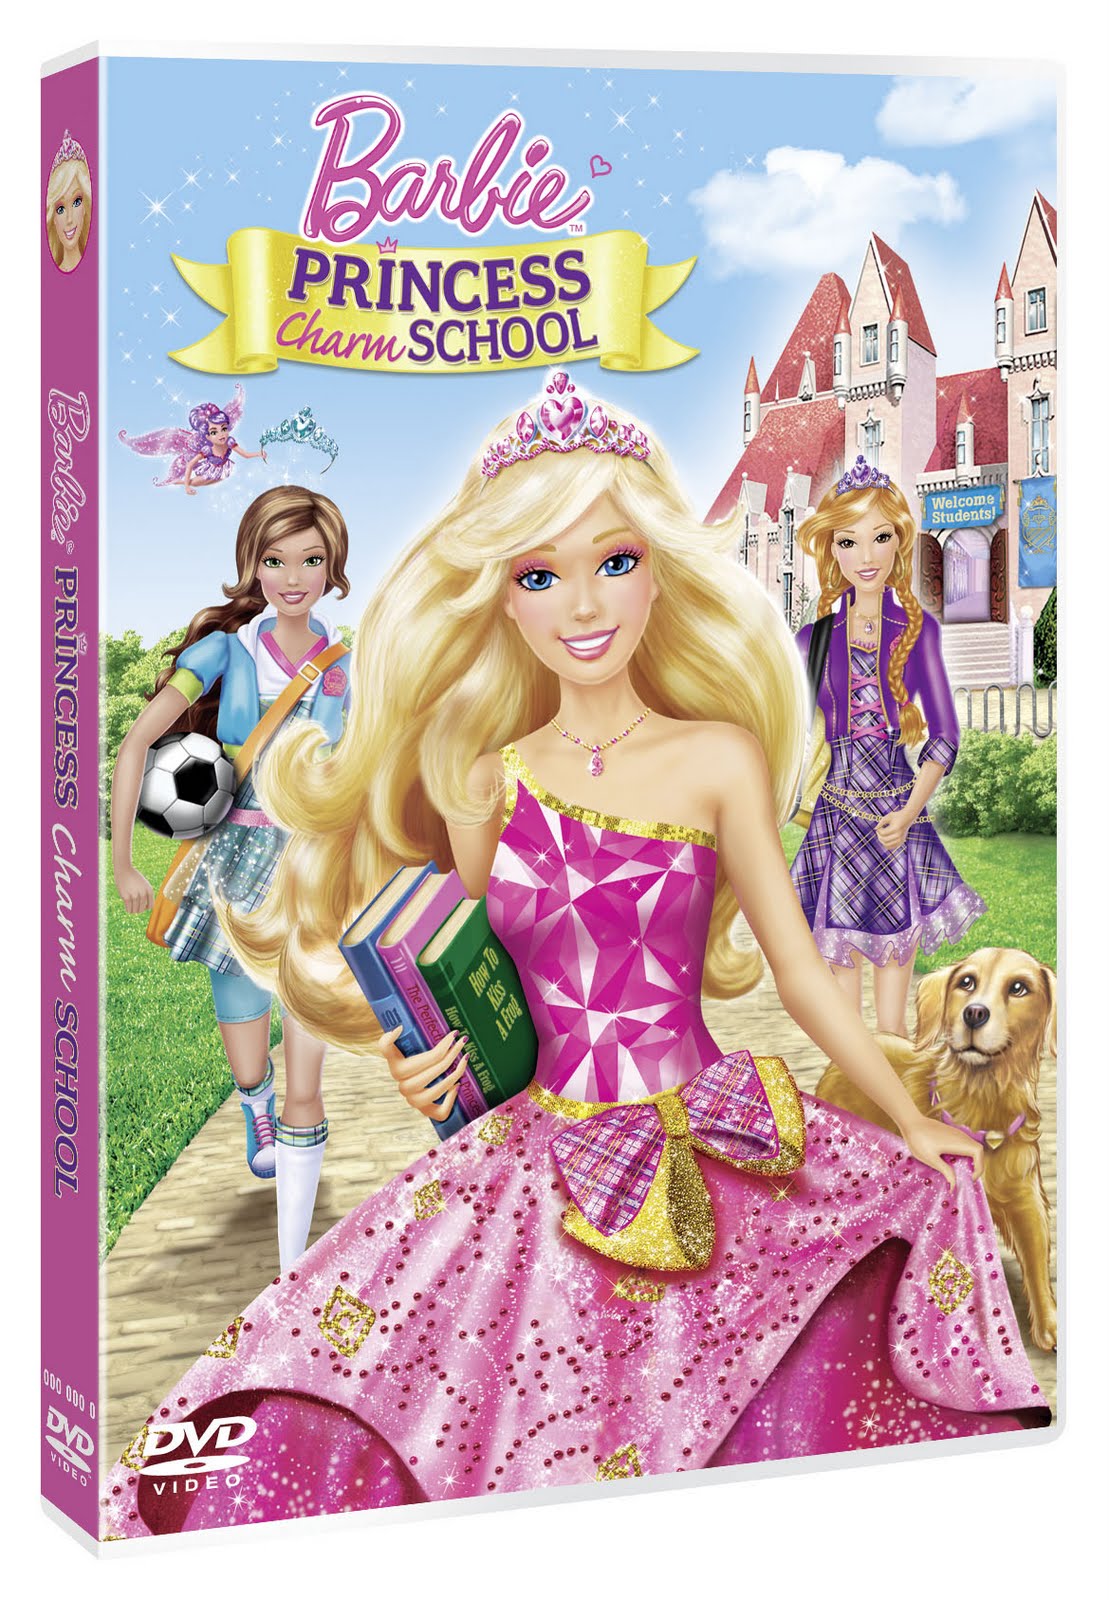 barbie princess charm school ending